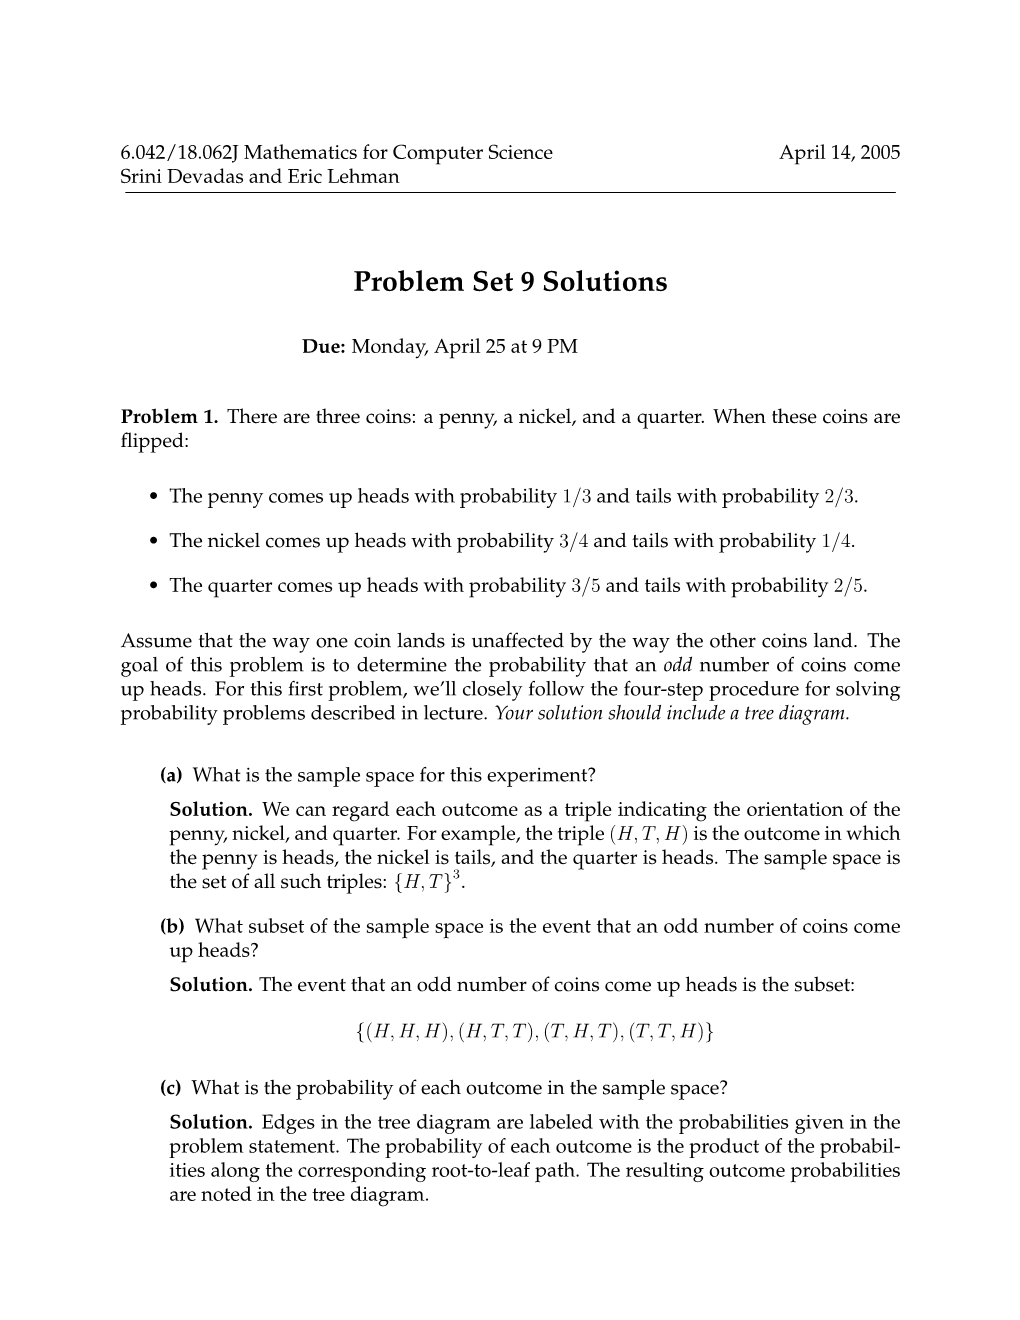 Problem Set 9 Solutions